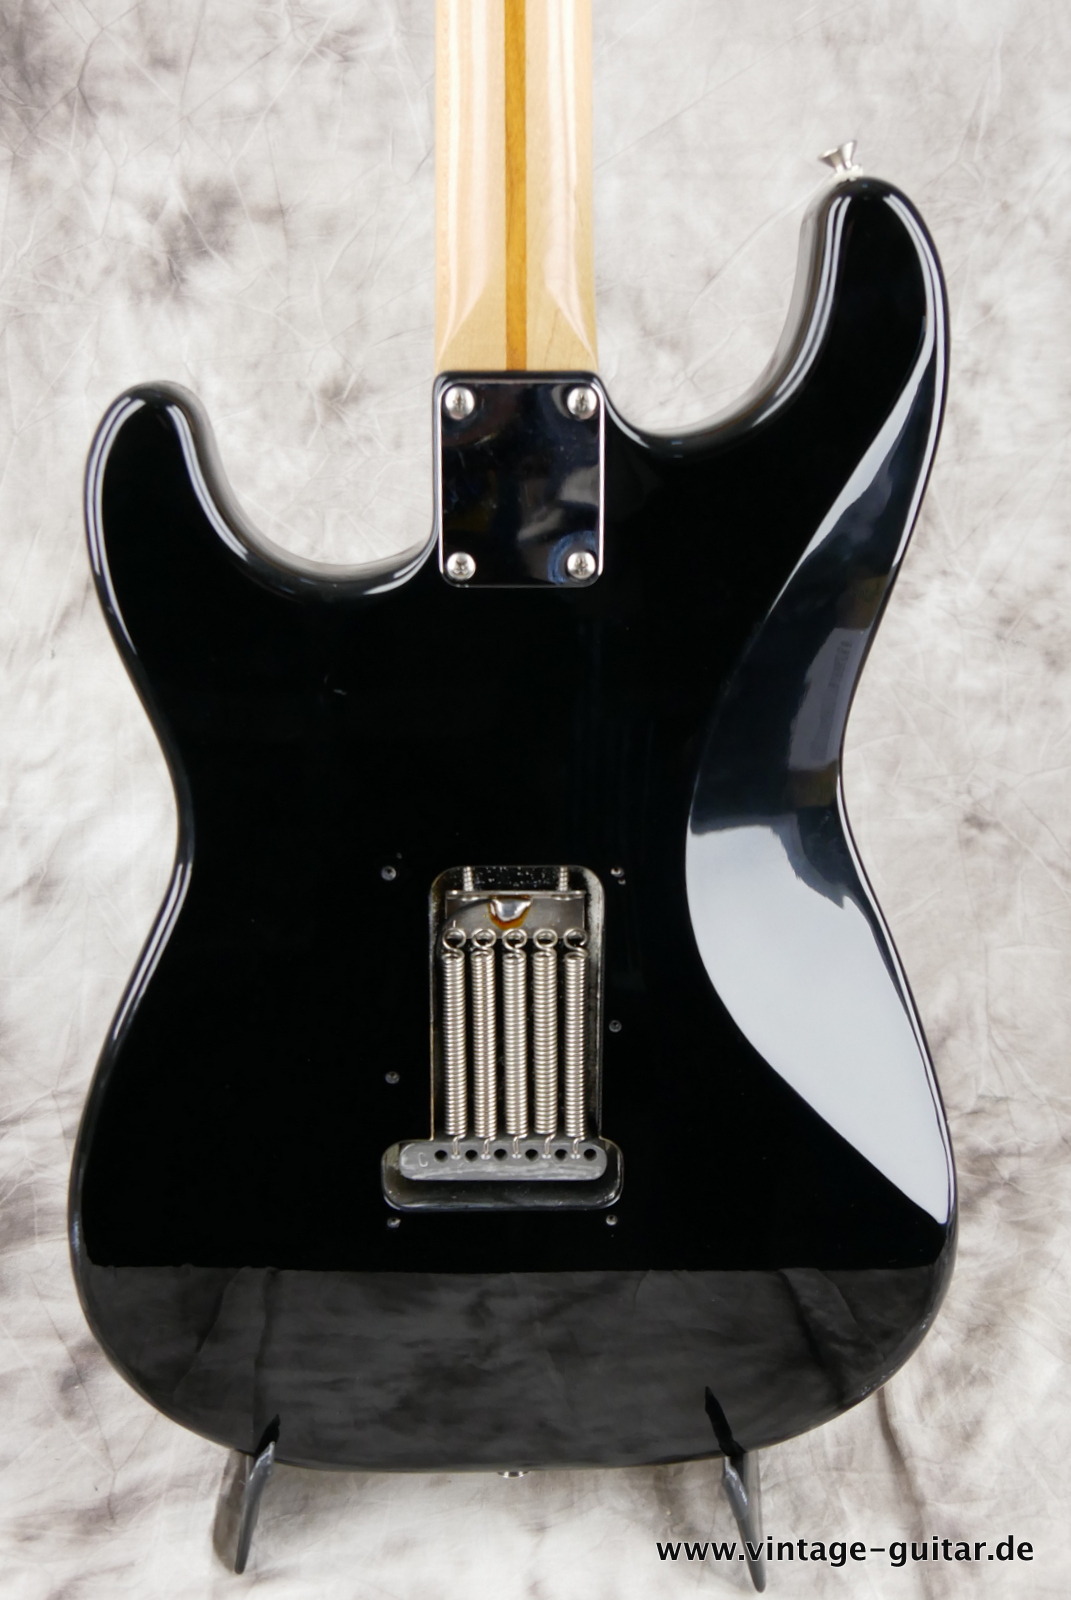 Fender_Stratocaster_black_1996_Humbucker_made_in_mexico-004.JPG